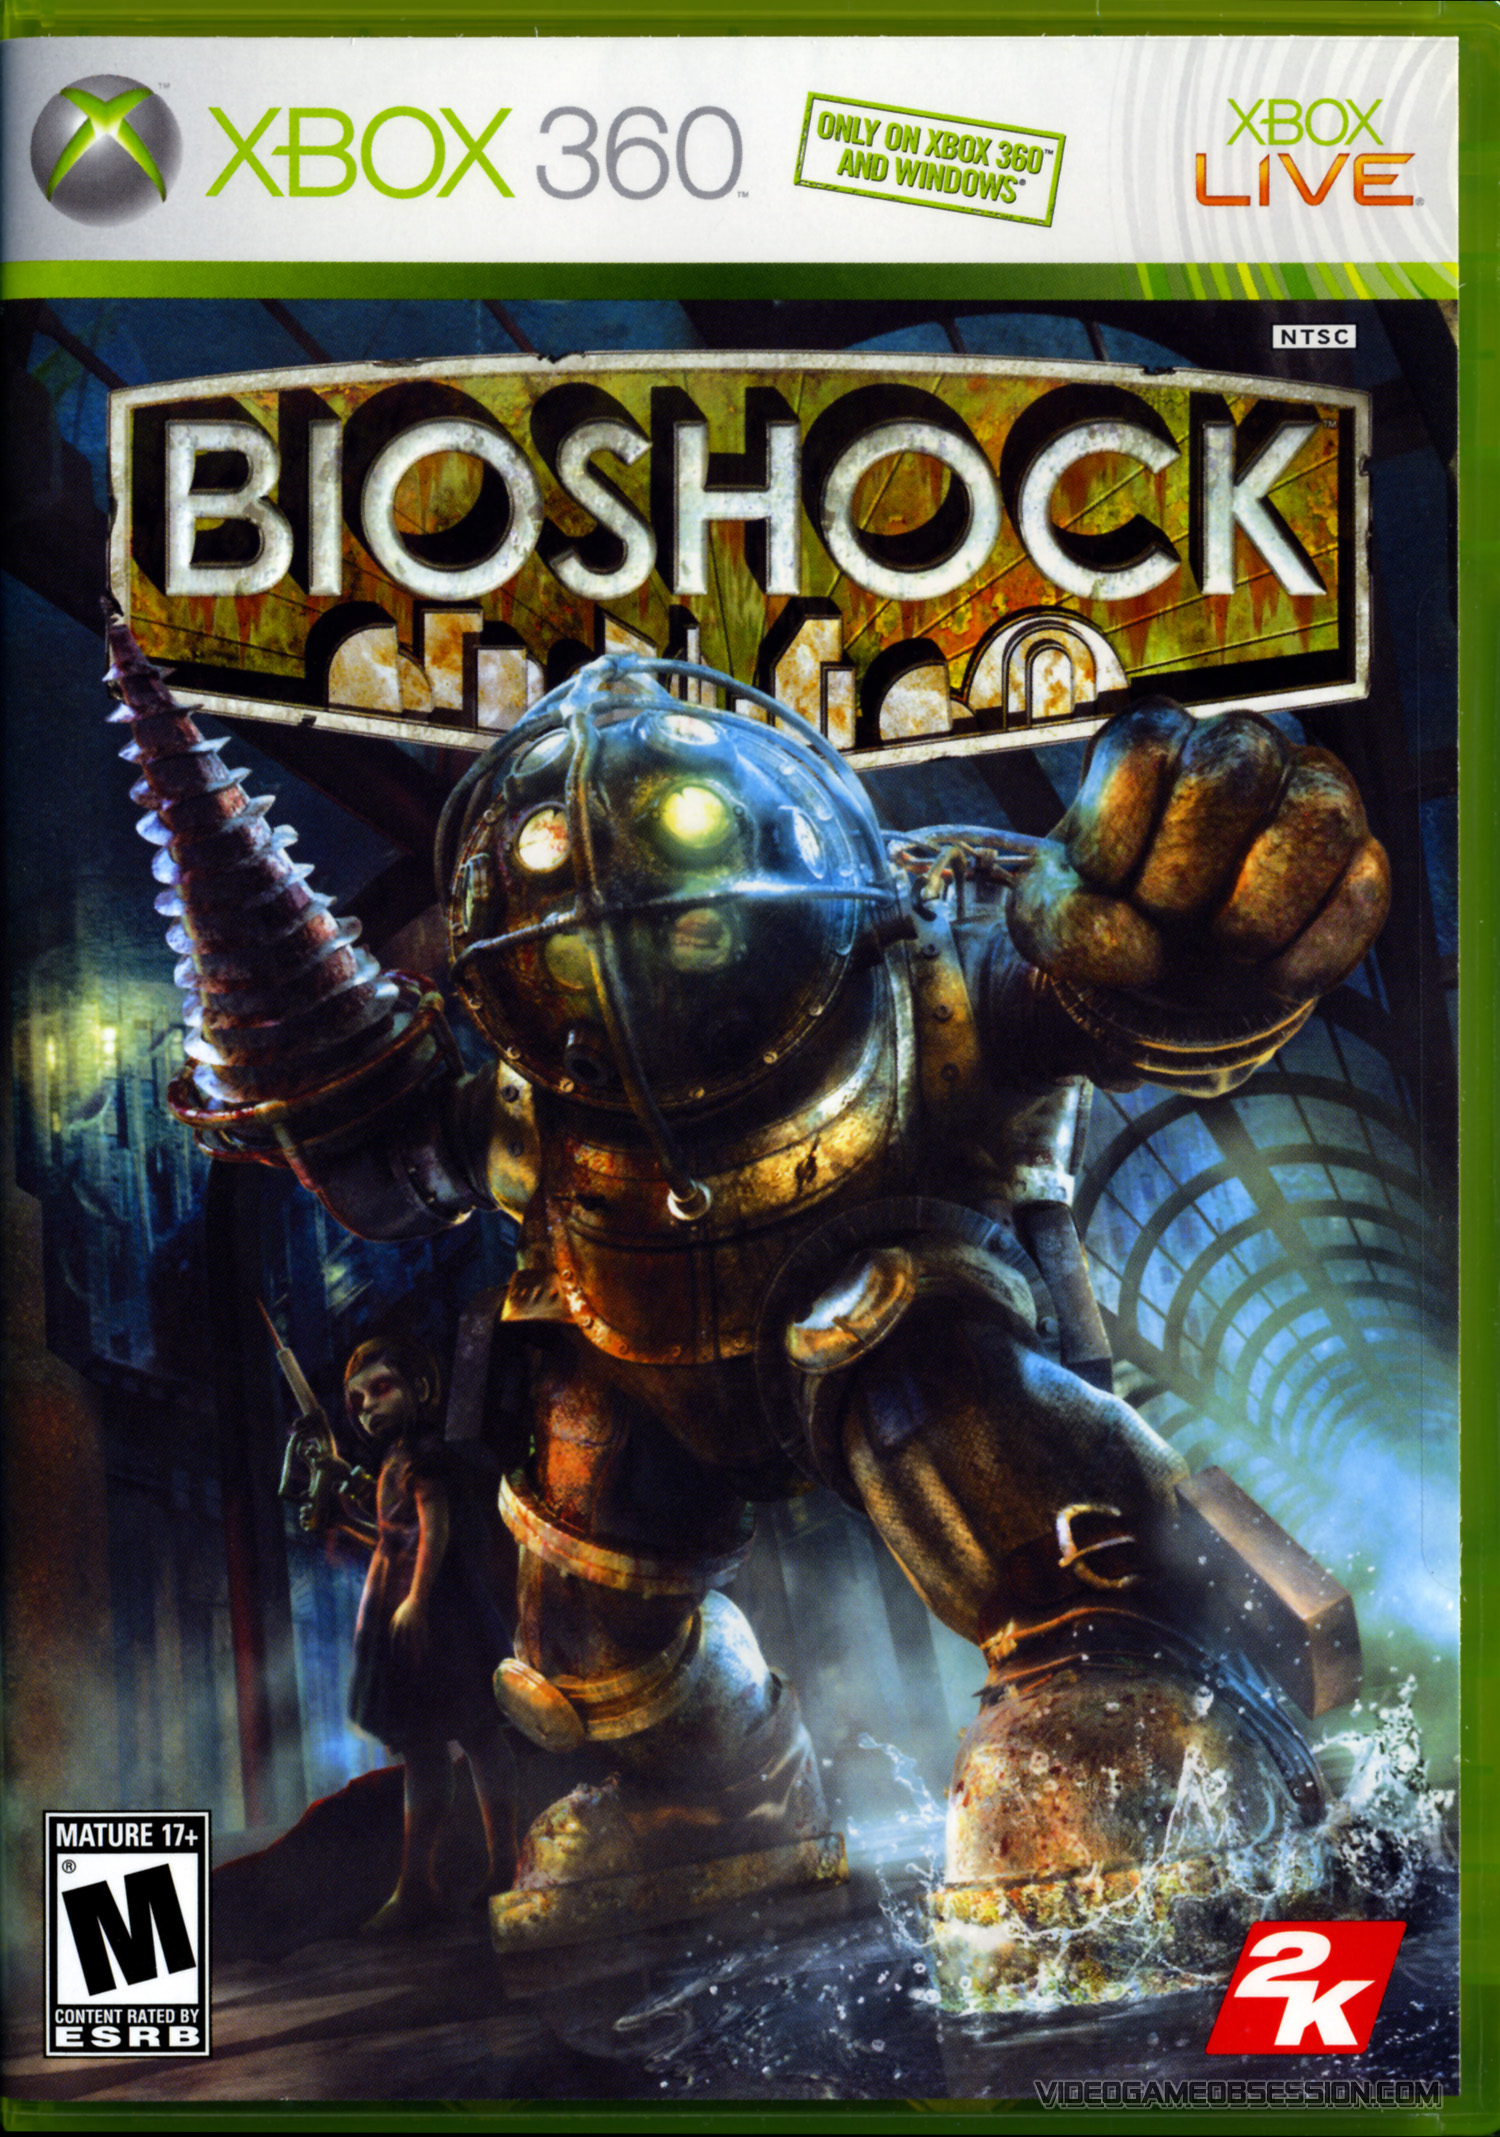 Xbox360-Bioshock-vgo.jpg